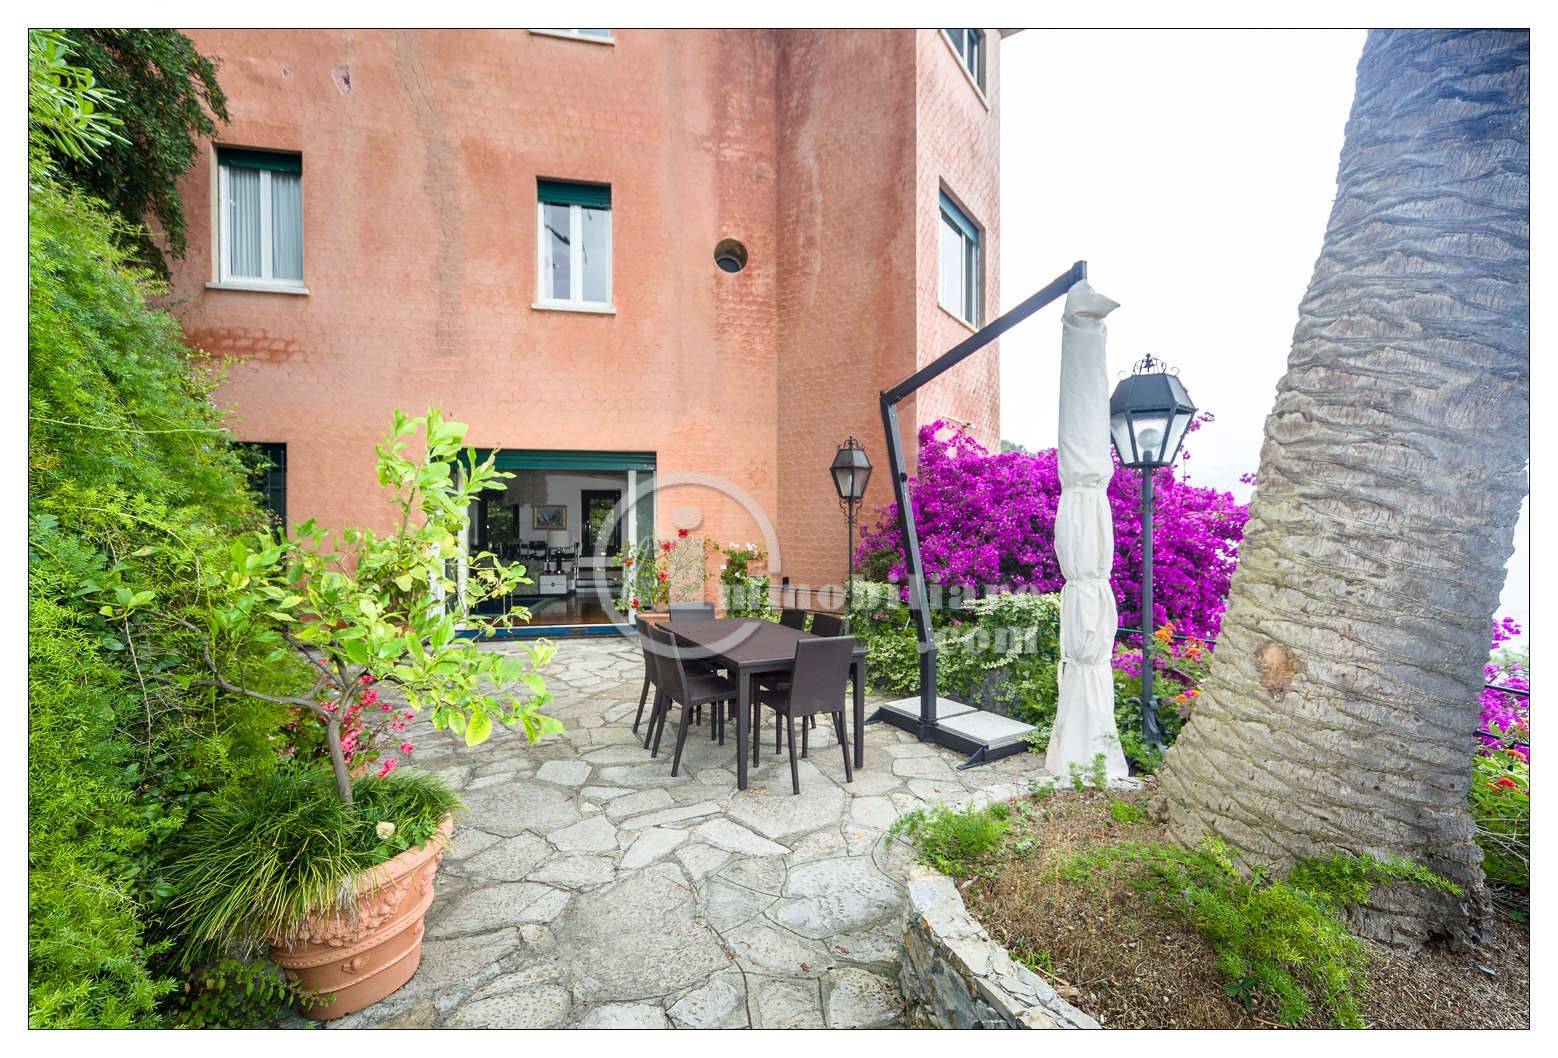 Villa in Vendita a Santa Margherita Ligure: 5 locali, 600 mq - Foto 18